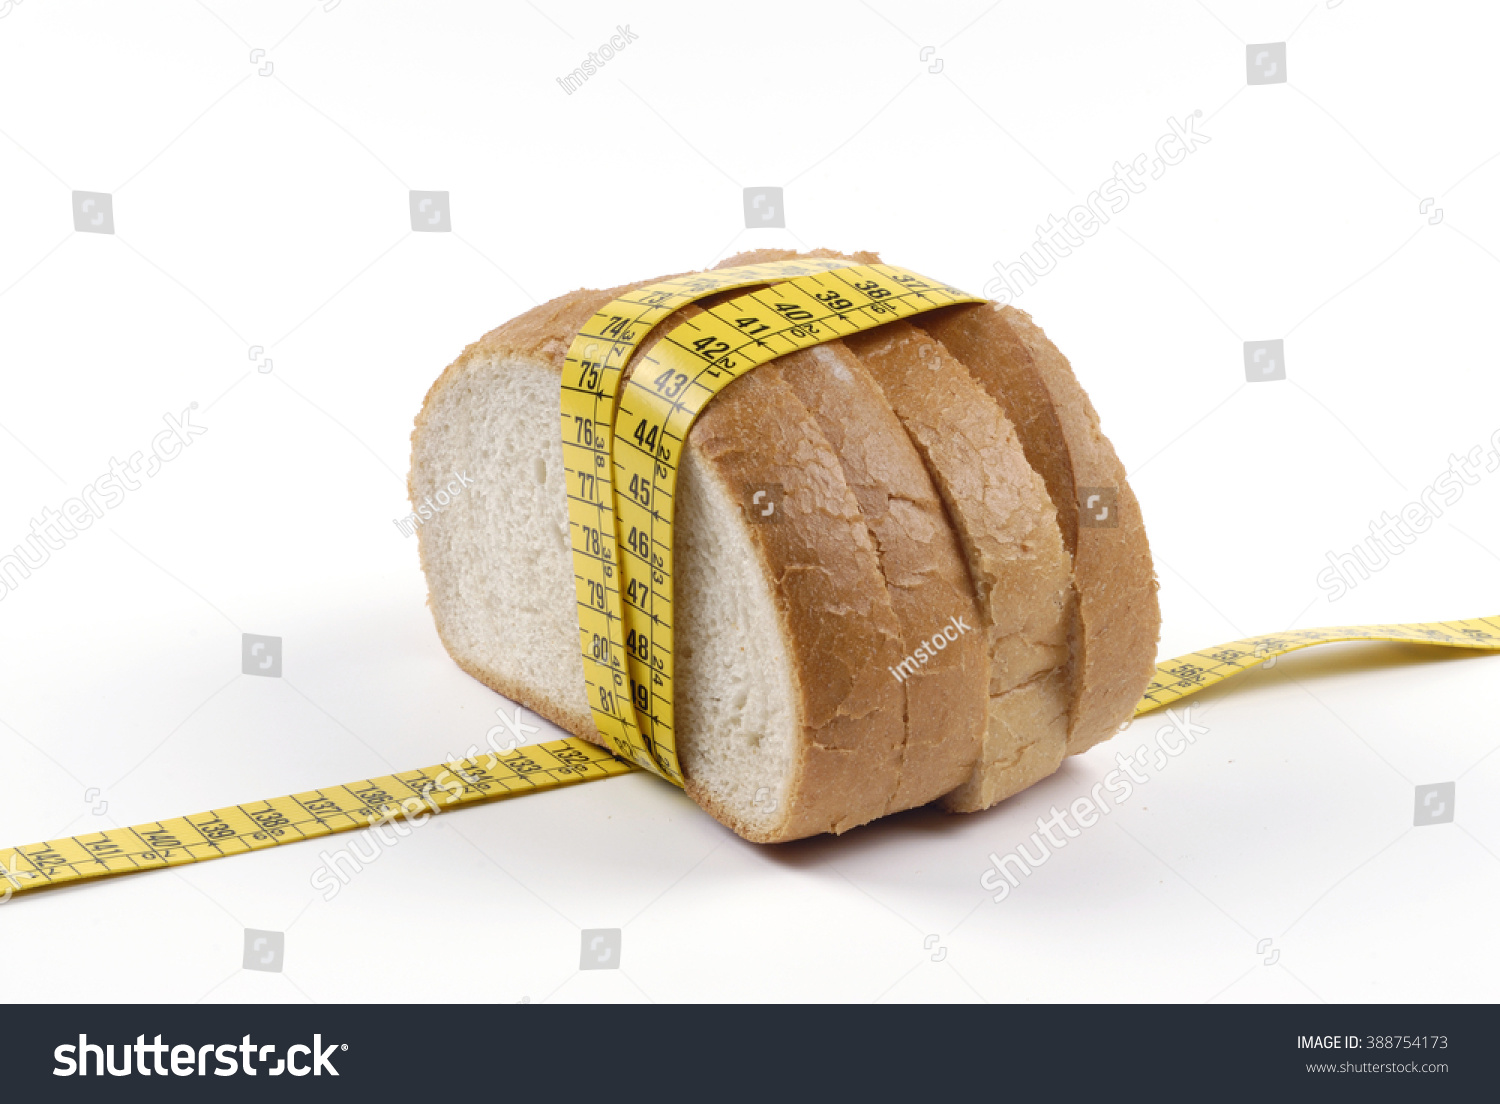 bread tape